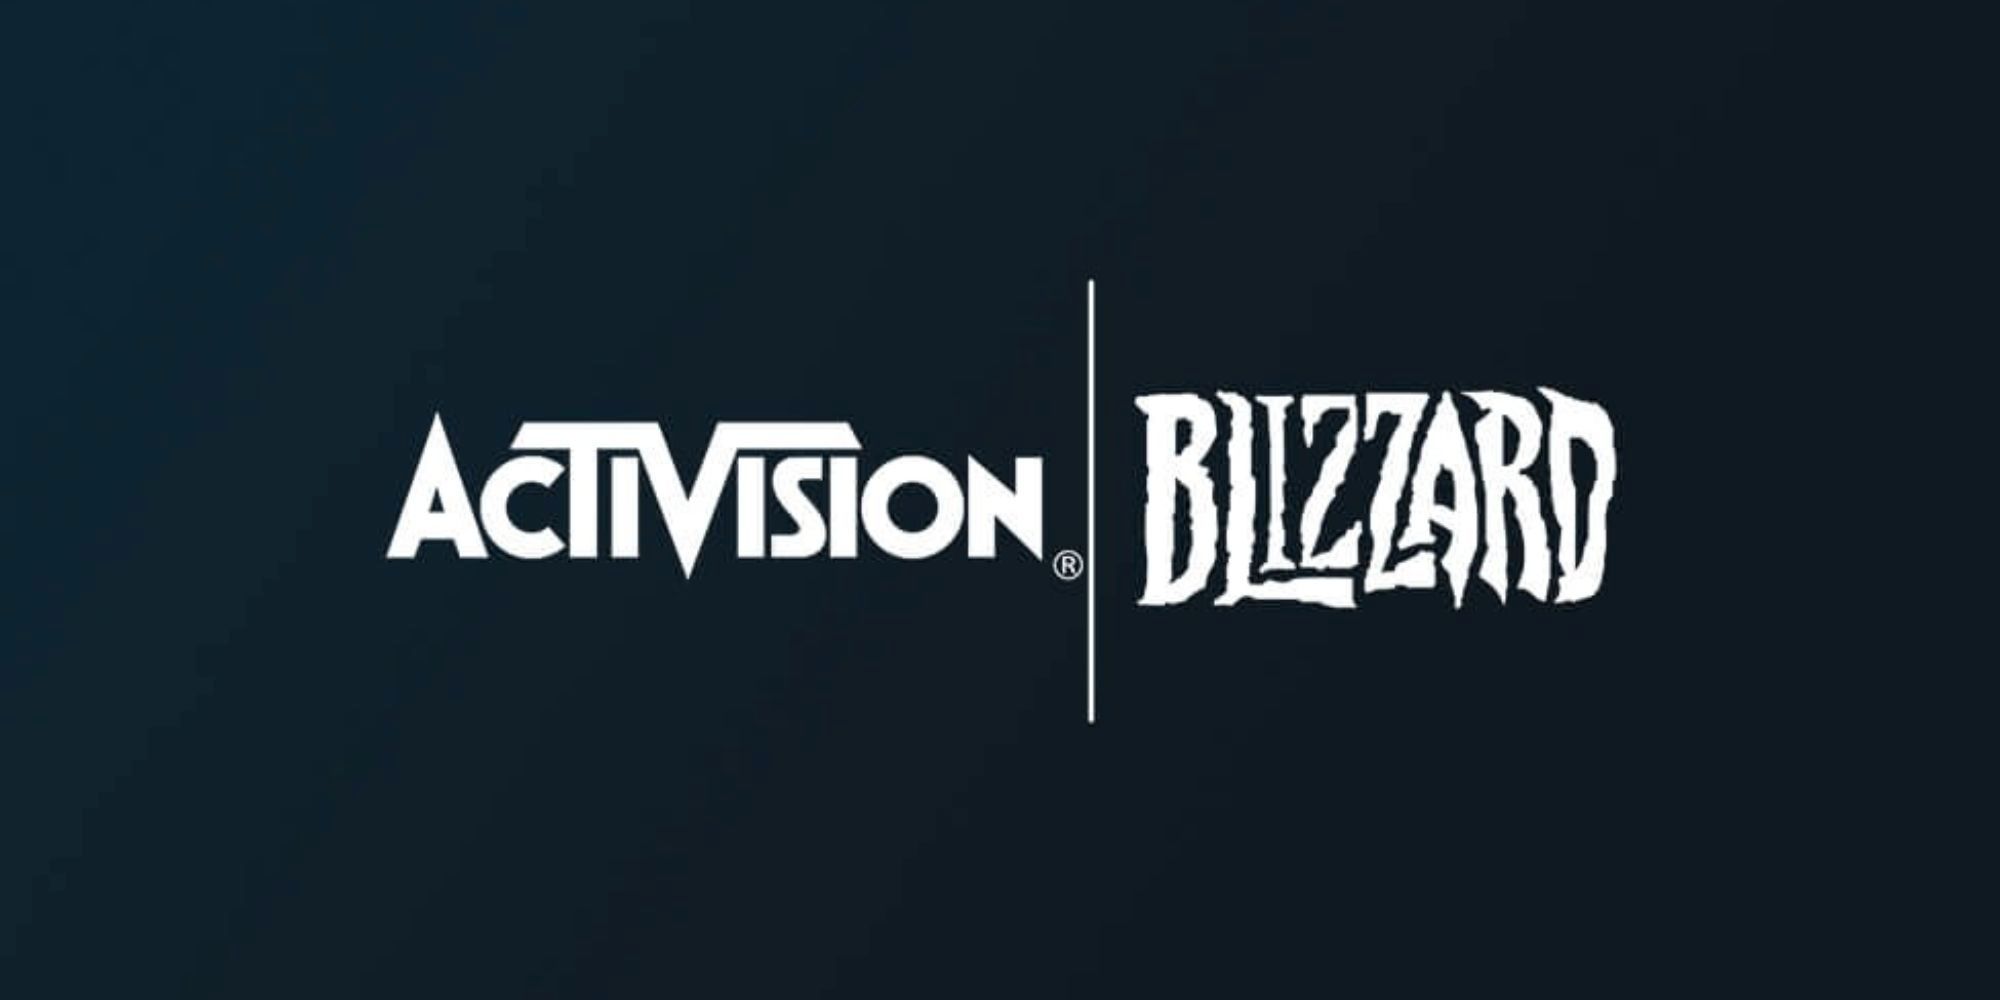 ʻO ka Blizzard Activision (1)